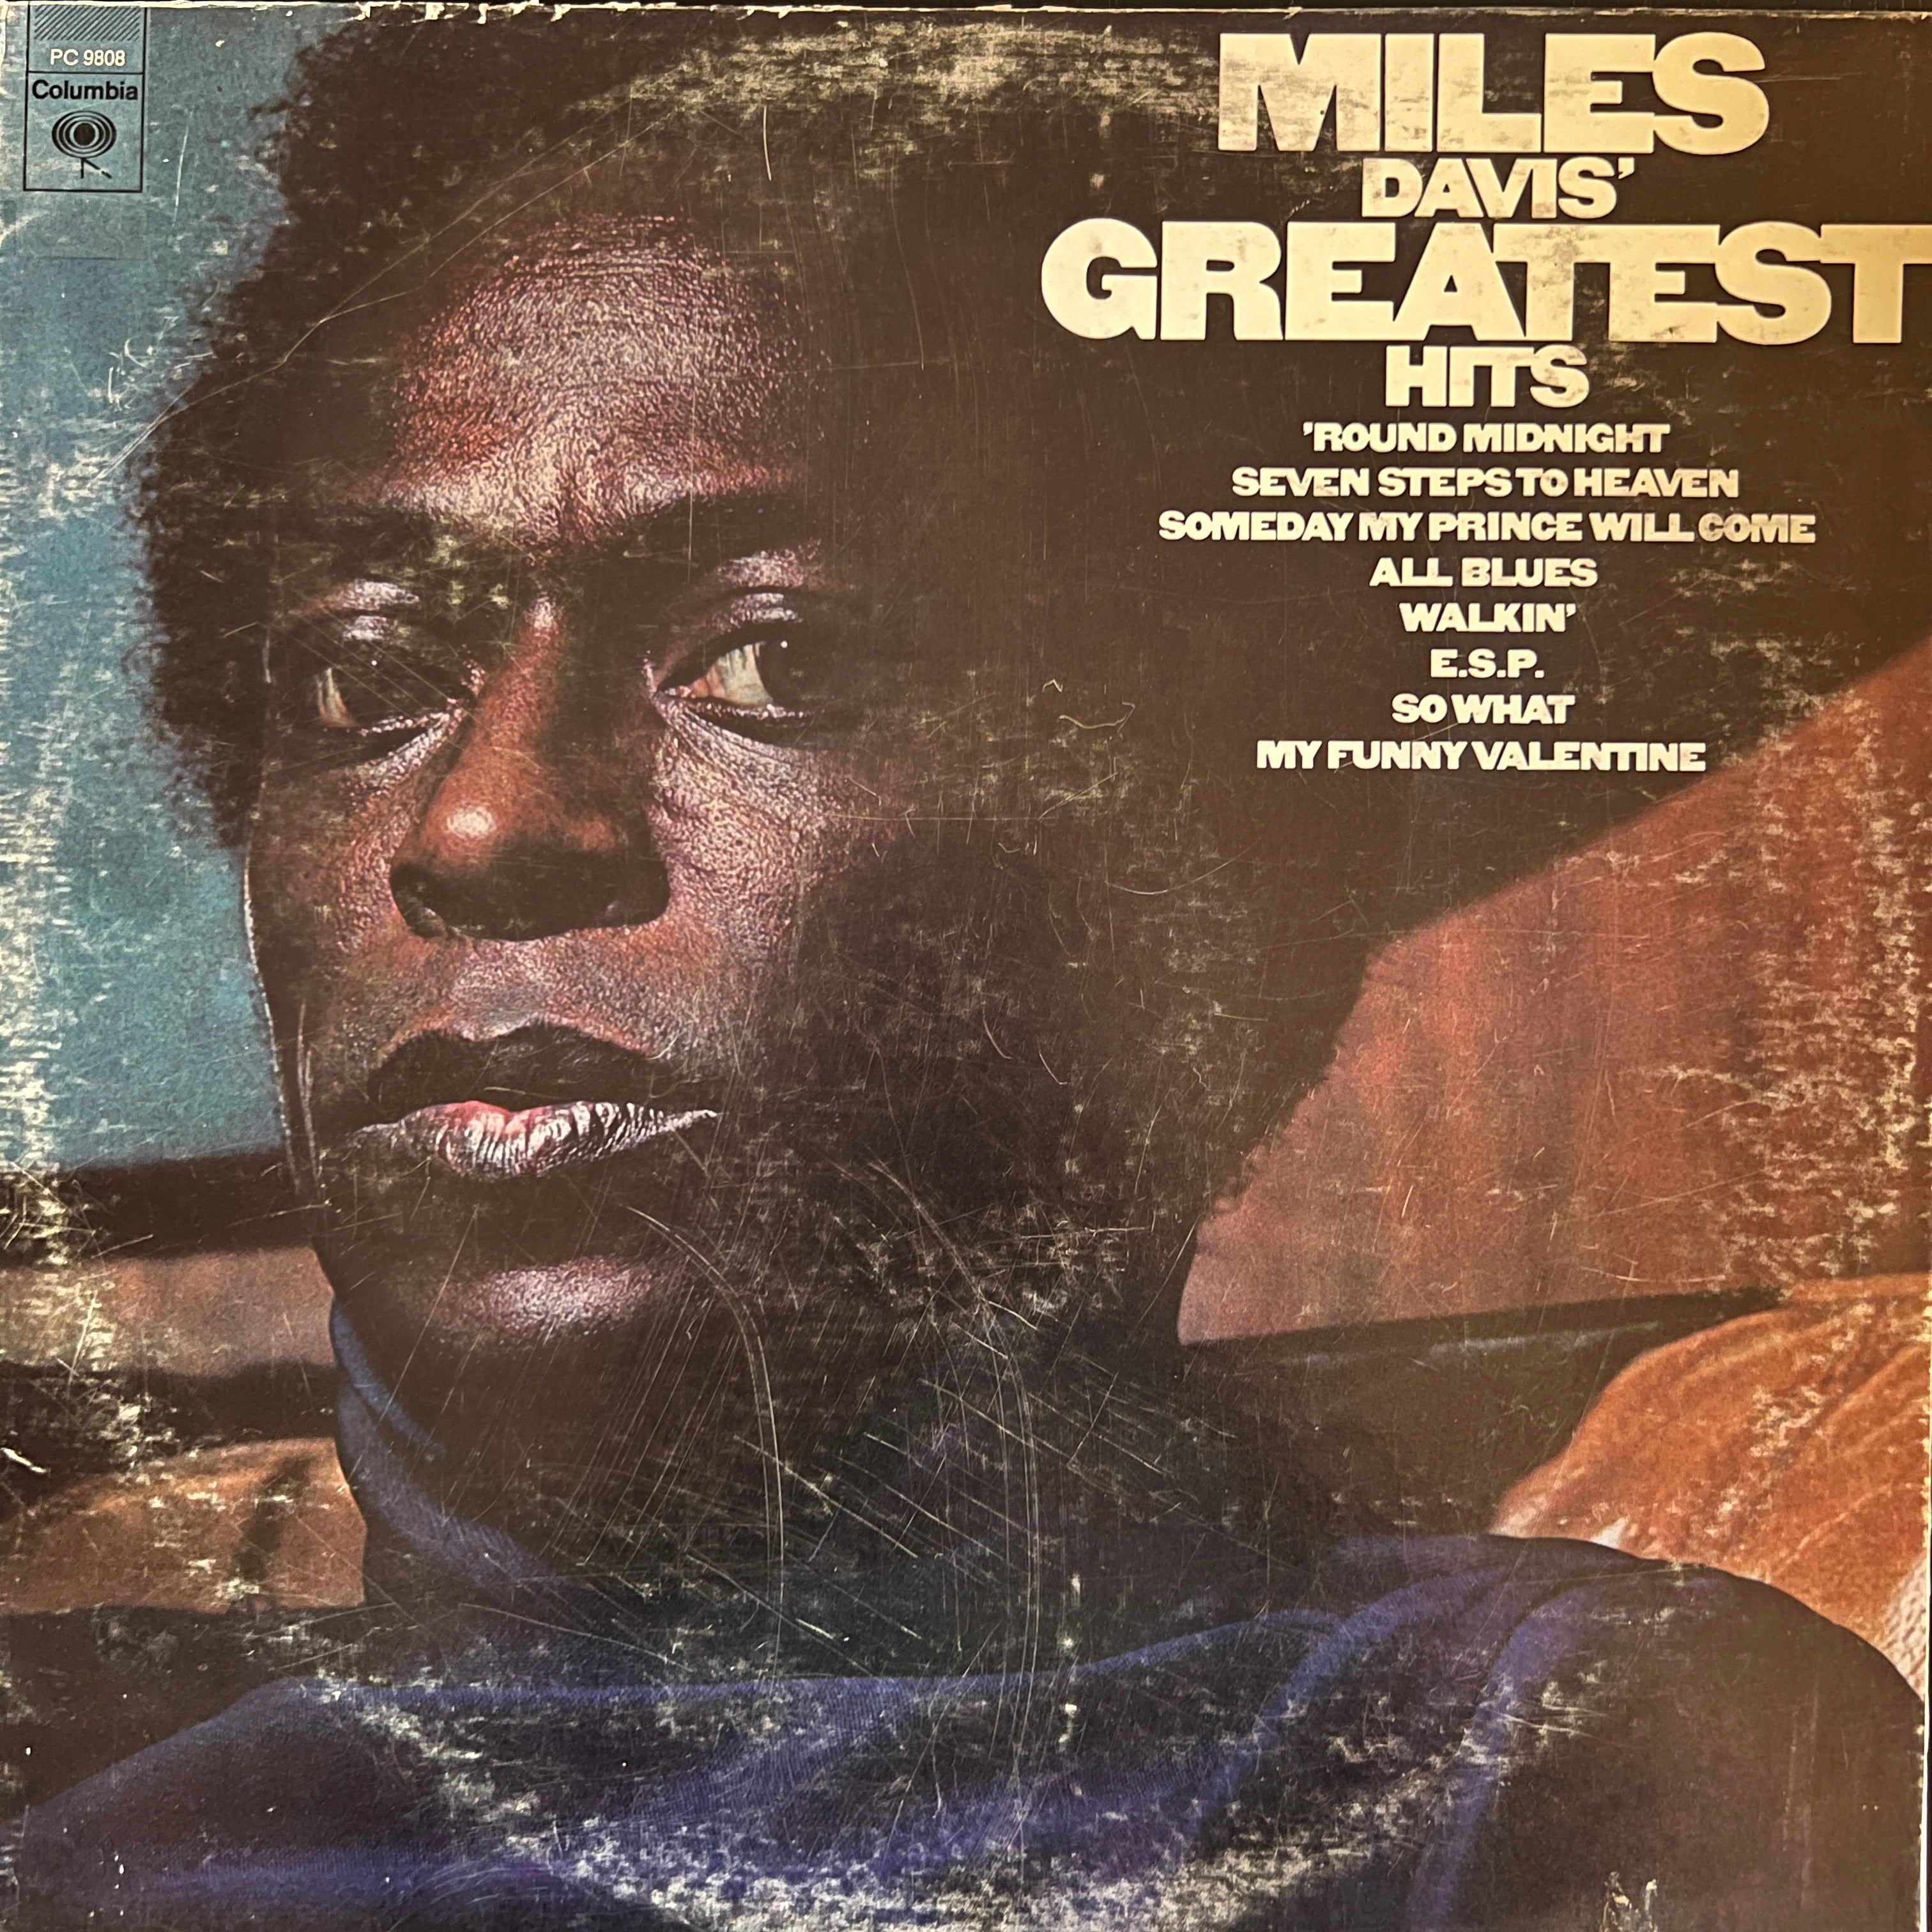 Miles Davis - Greatest Hits Vinyl LP (Columbia, Santa Maria Pressing CS9809) VG+